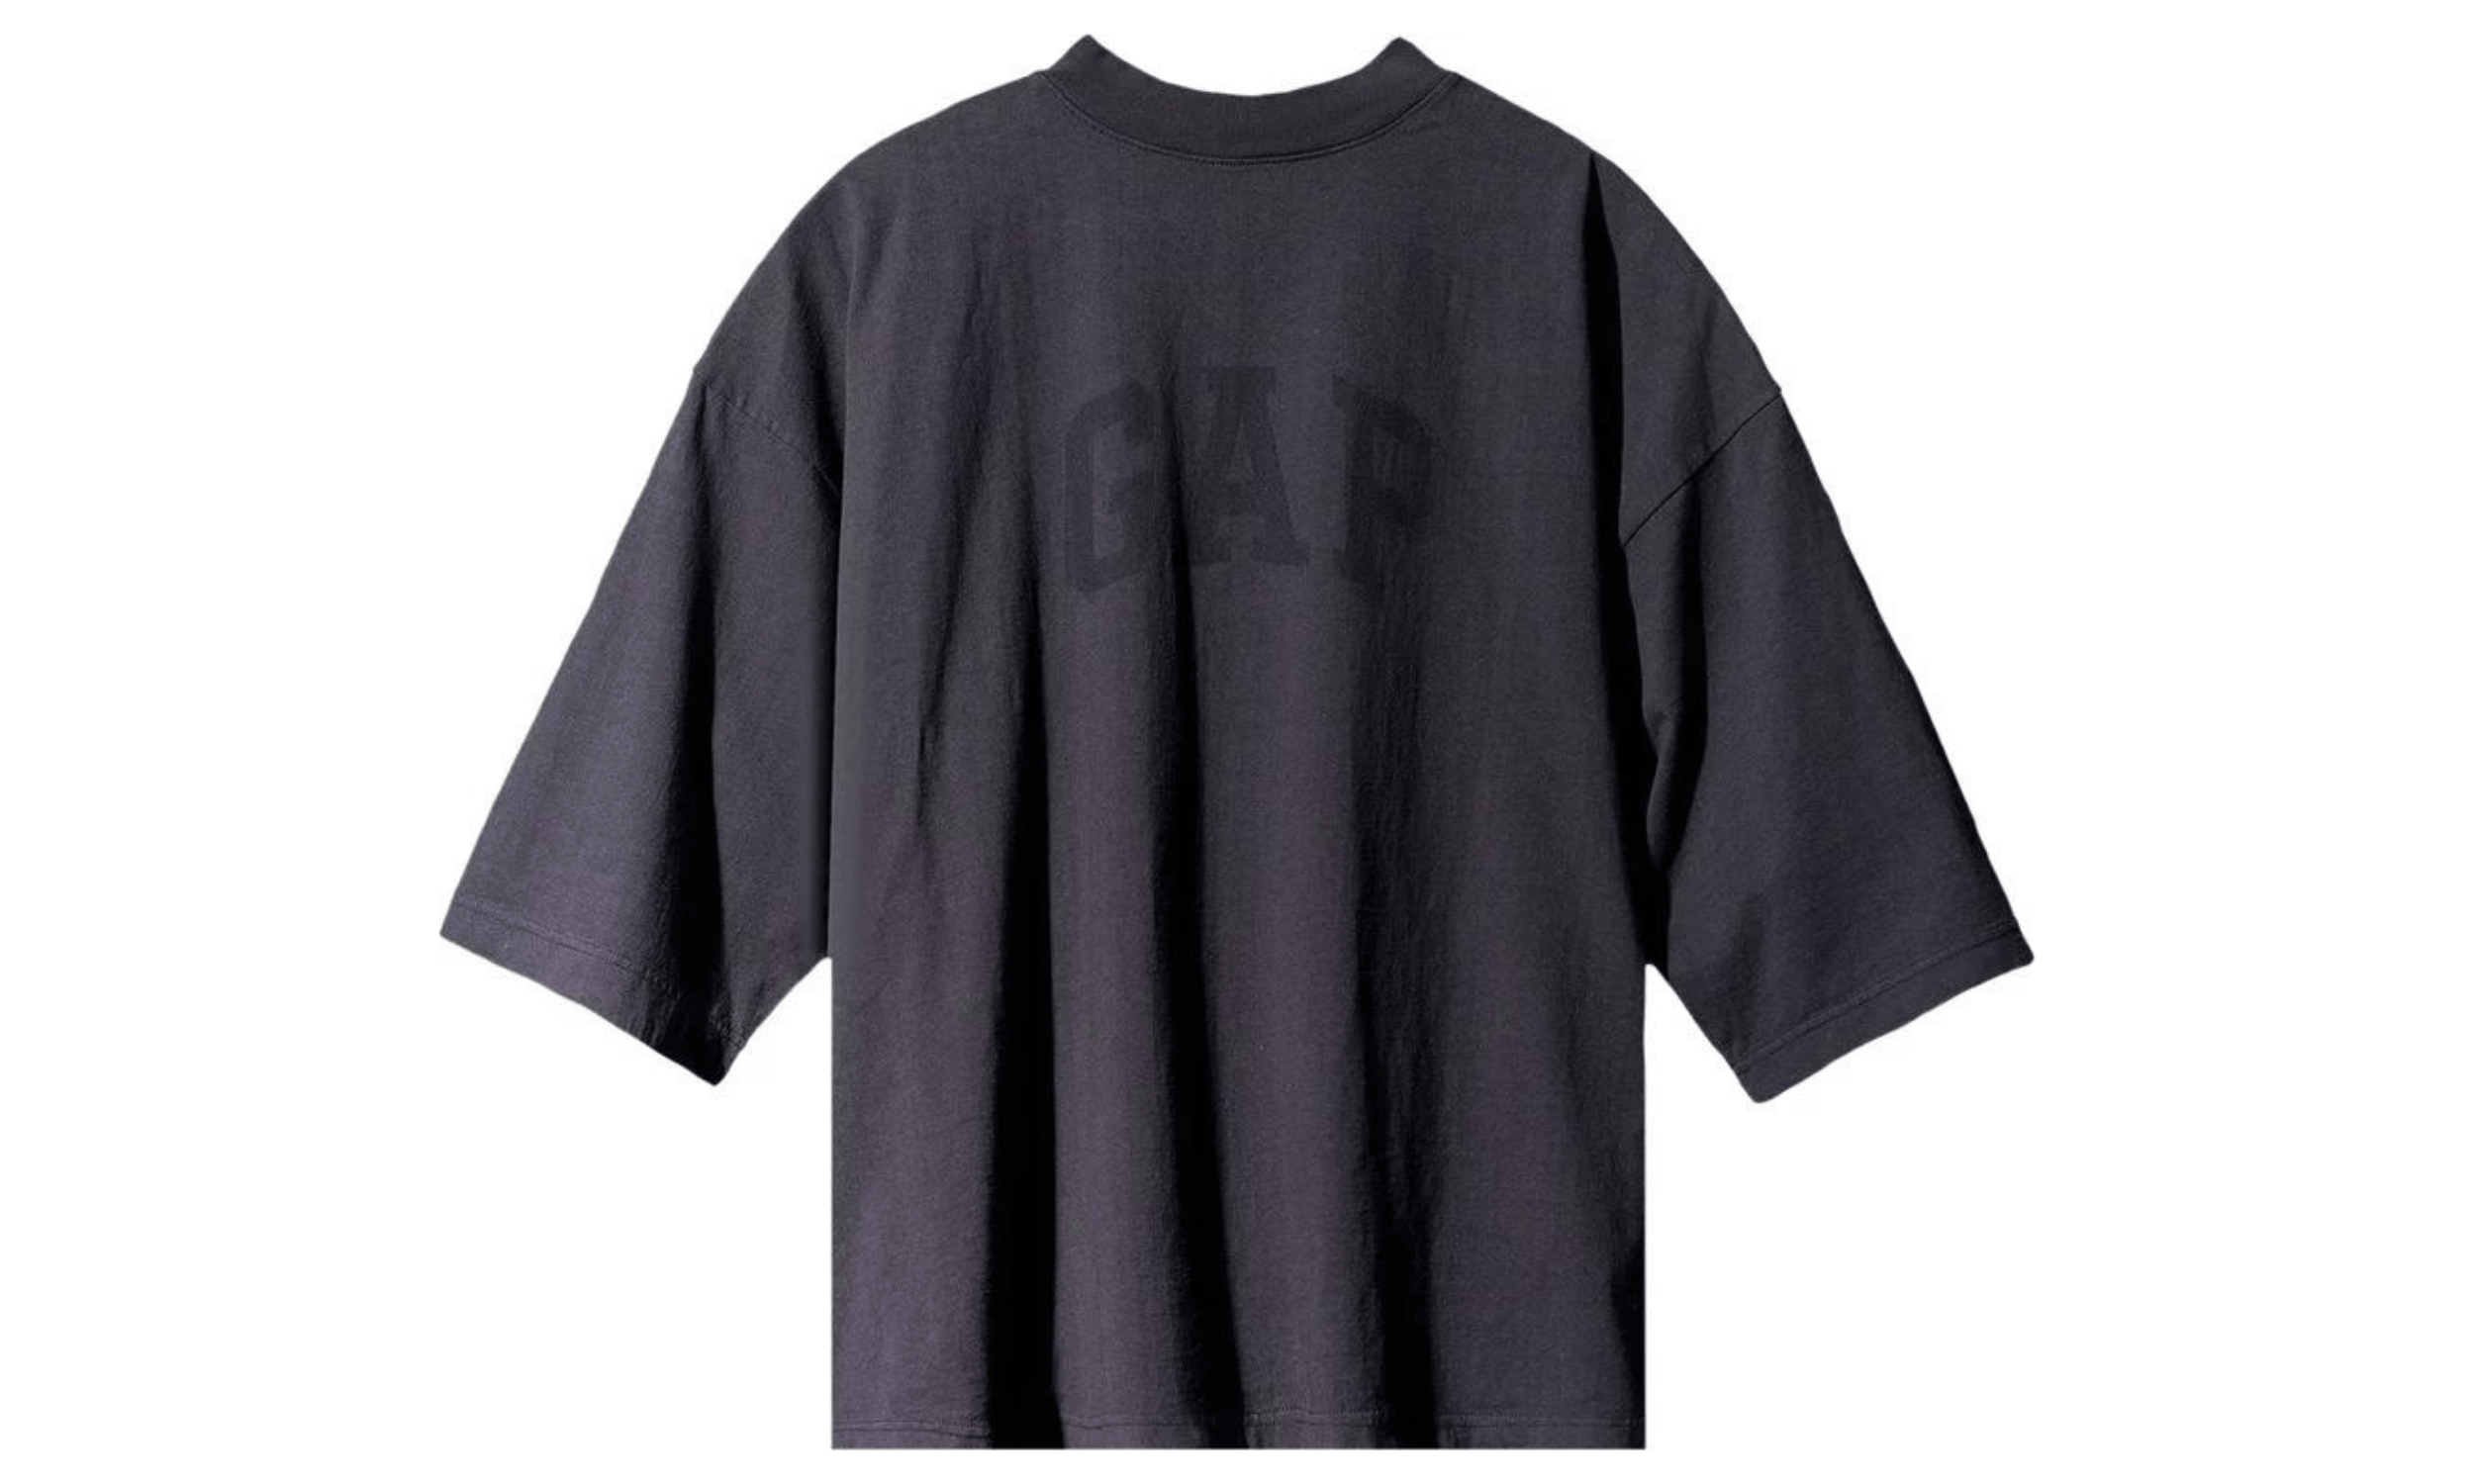 Yeezy Gap Engineered by Balenciaga Dove 3/4 Sleeve Tee Black - Kicksite-4712860220000